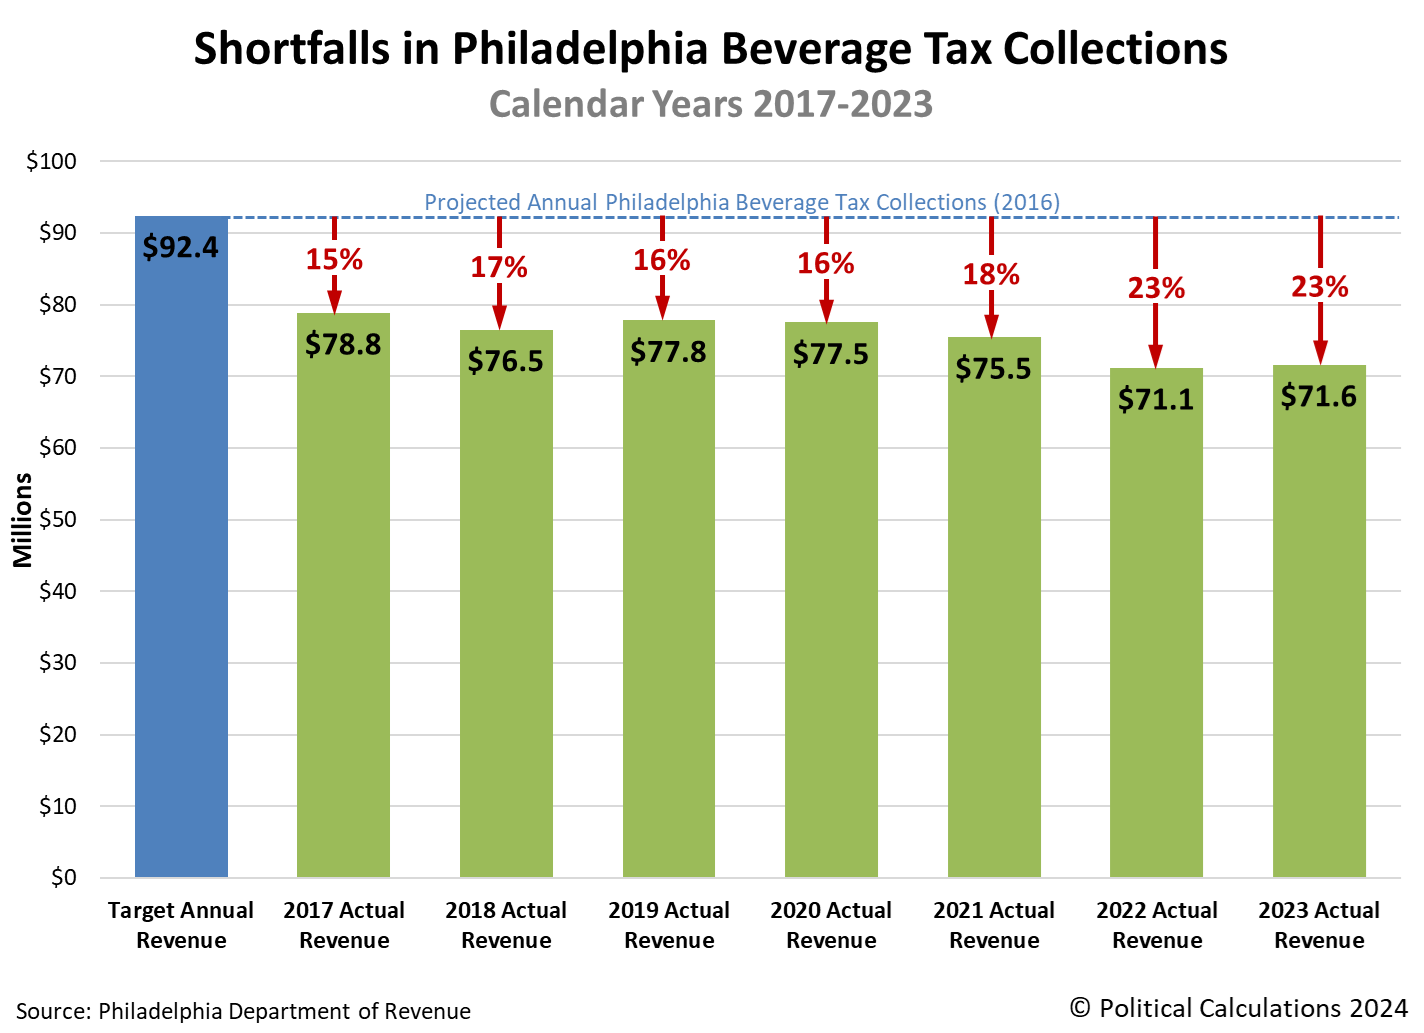 Shortfalls in Philadelphia Beverage Tax Collections, Calendar Years 2017-2023